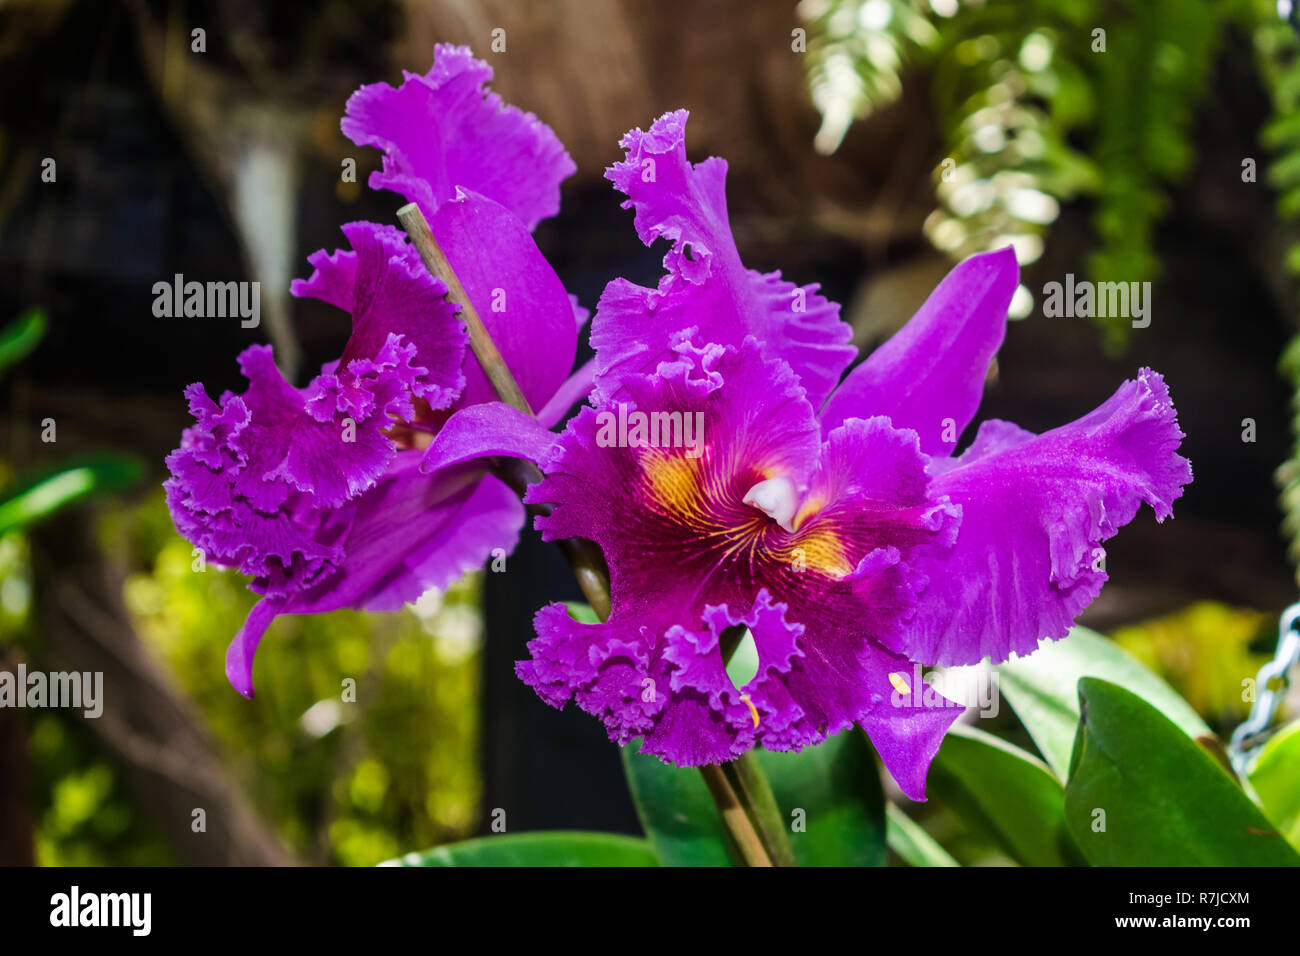 Cattleya hybrid orchid, with jungle vegetation background Stock Photo